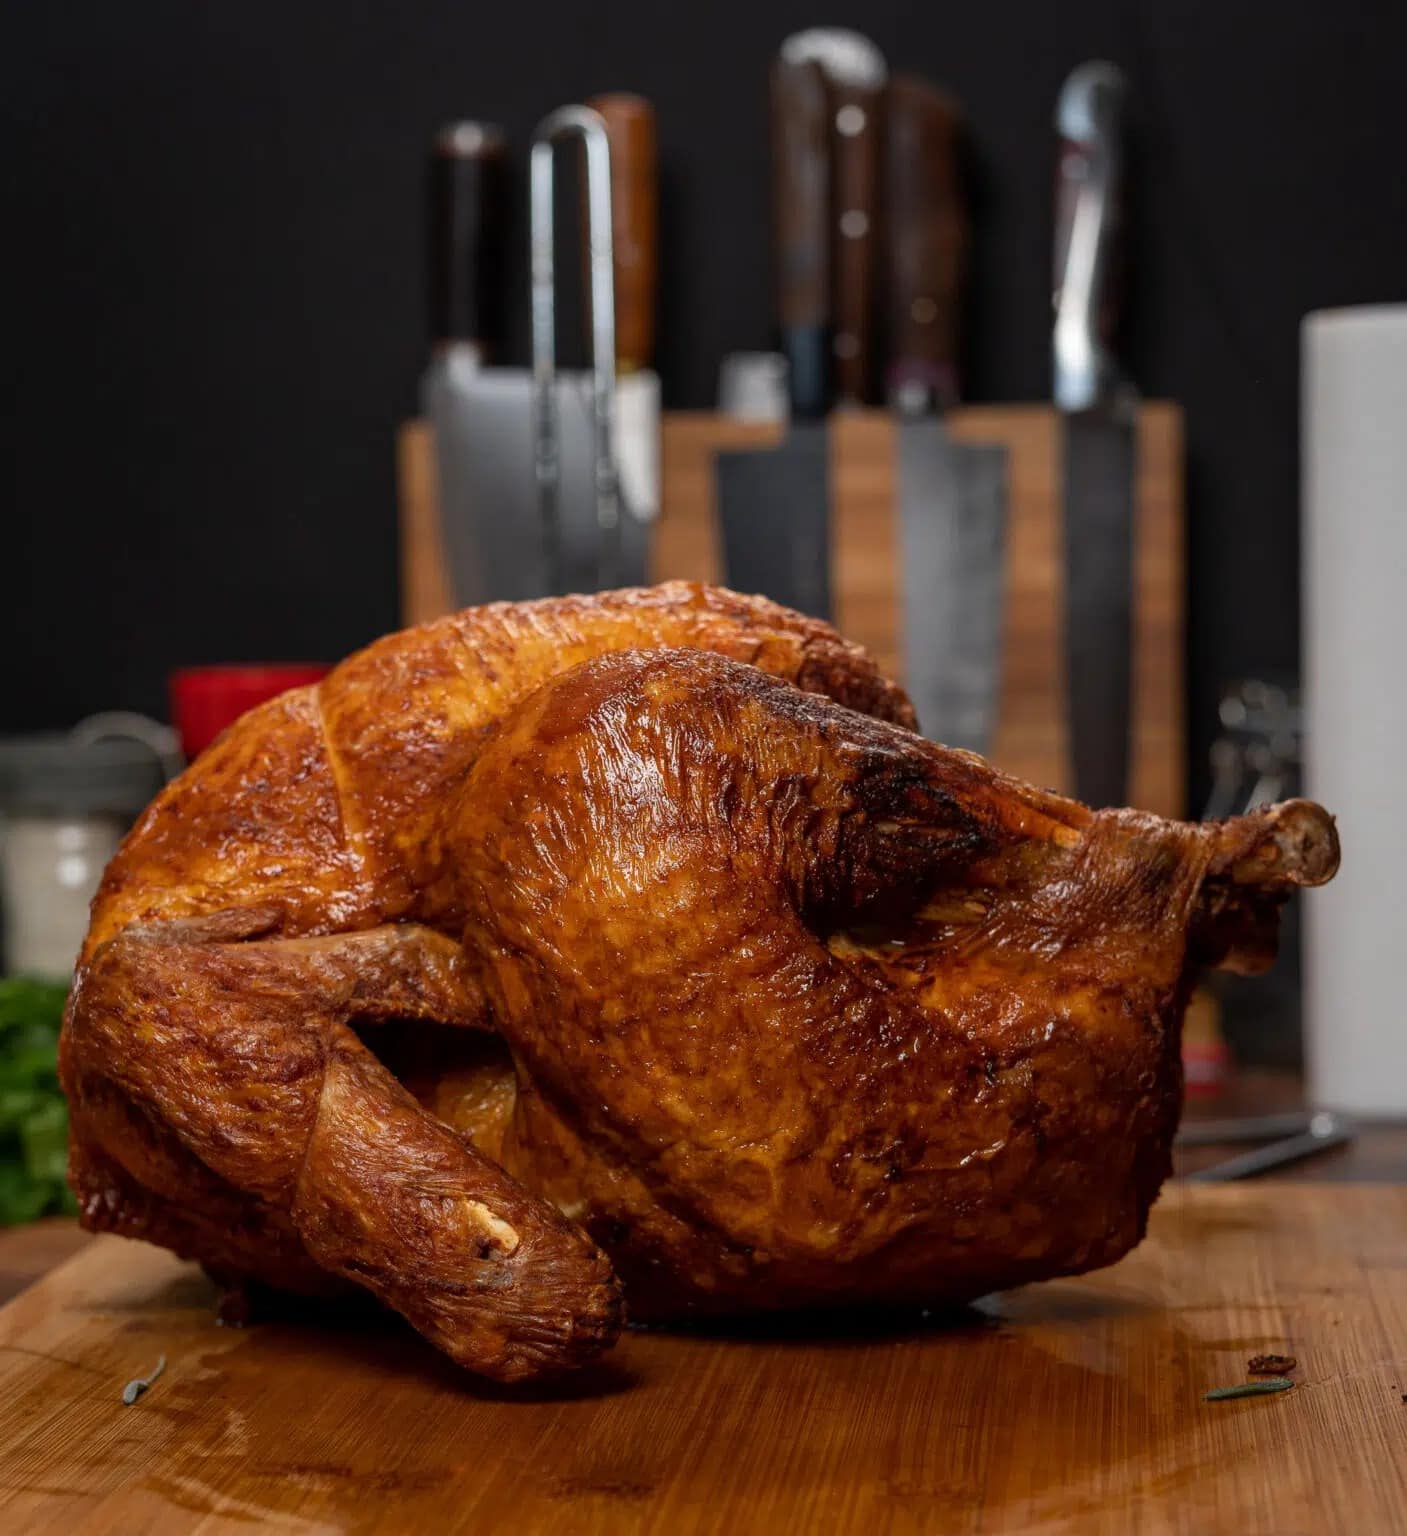 Whole Deep-Fried Turkey on a wooden cutting board